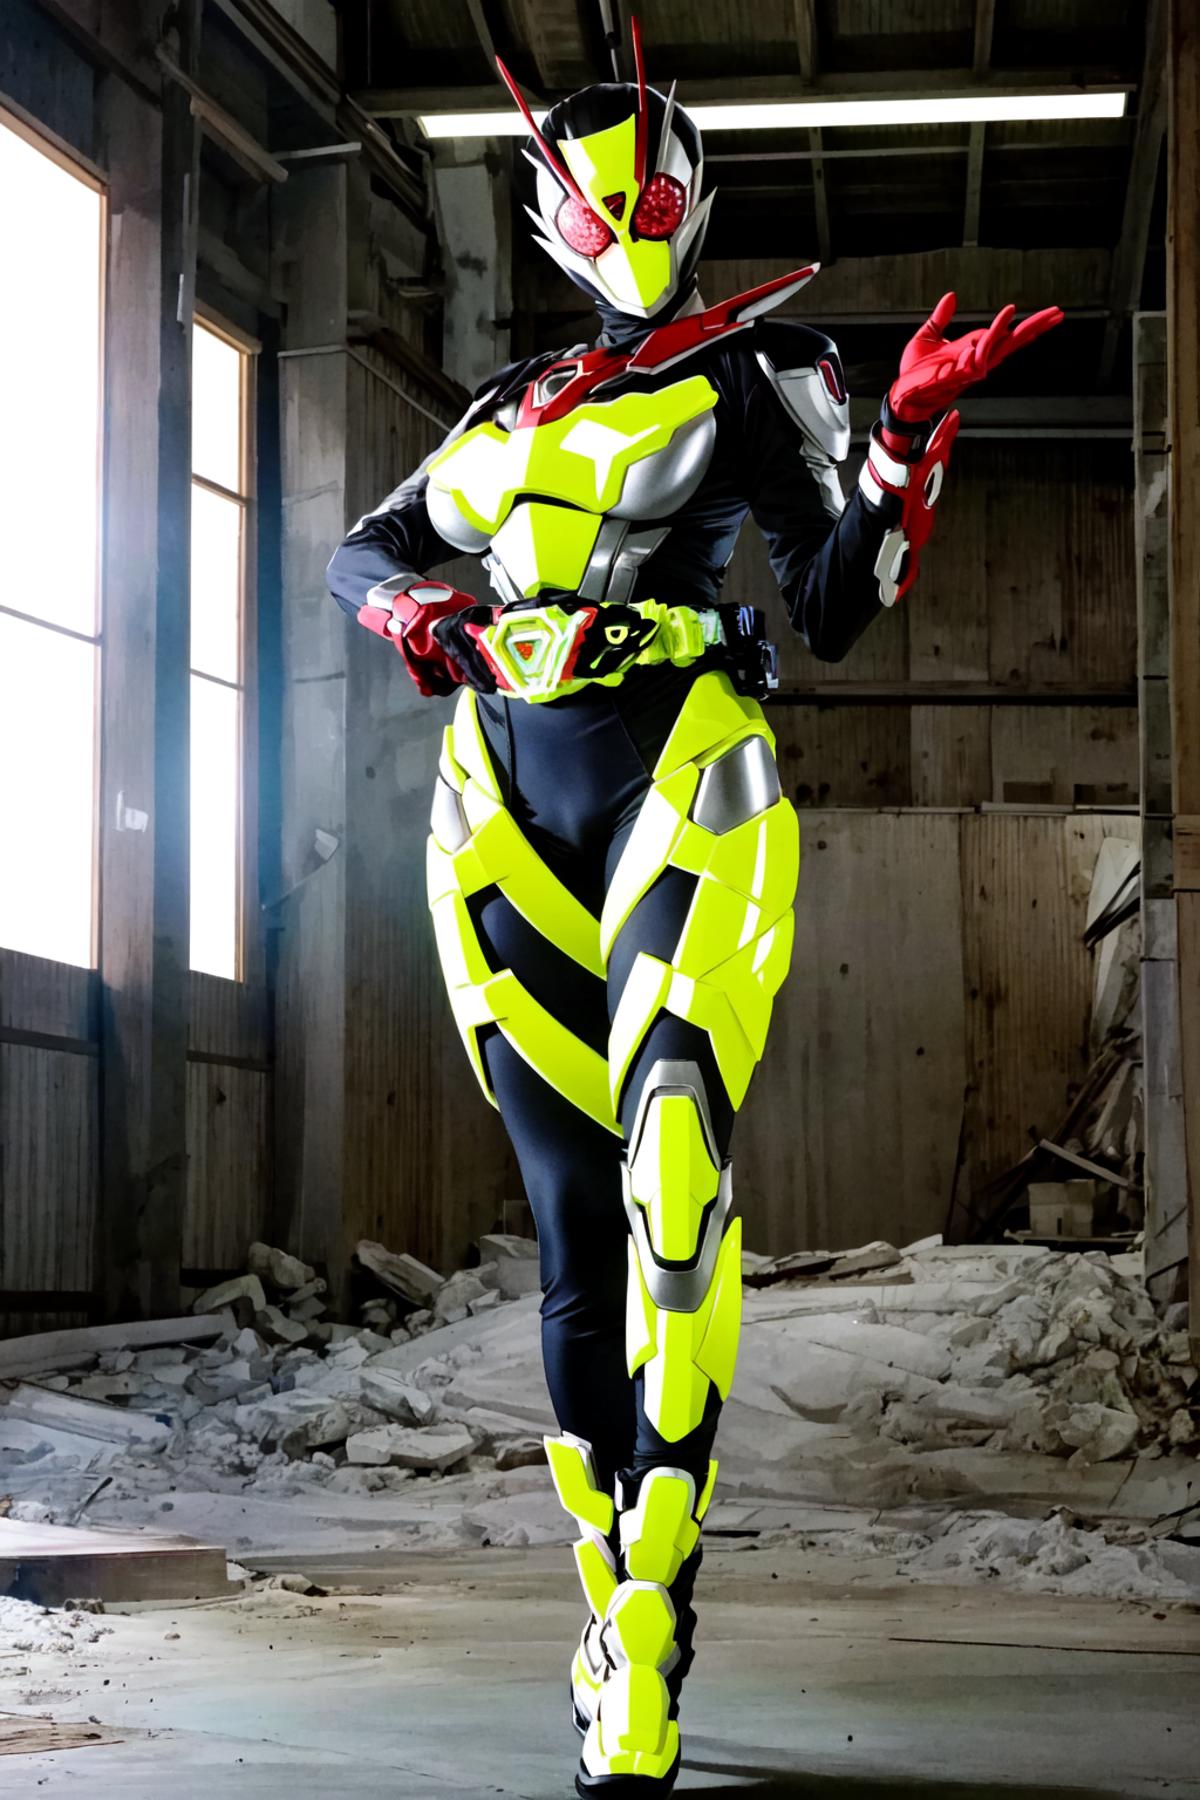 Kamen Rider Zero Two image by tkgg2219